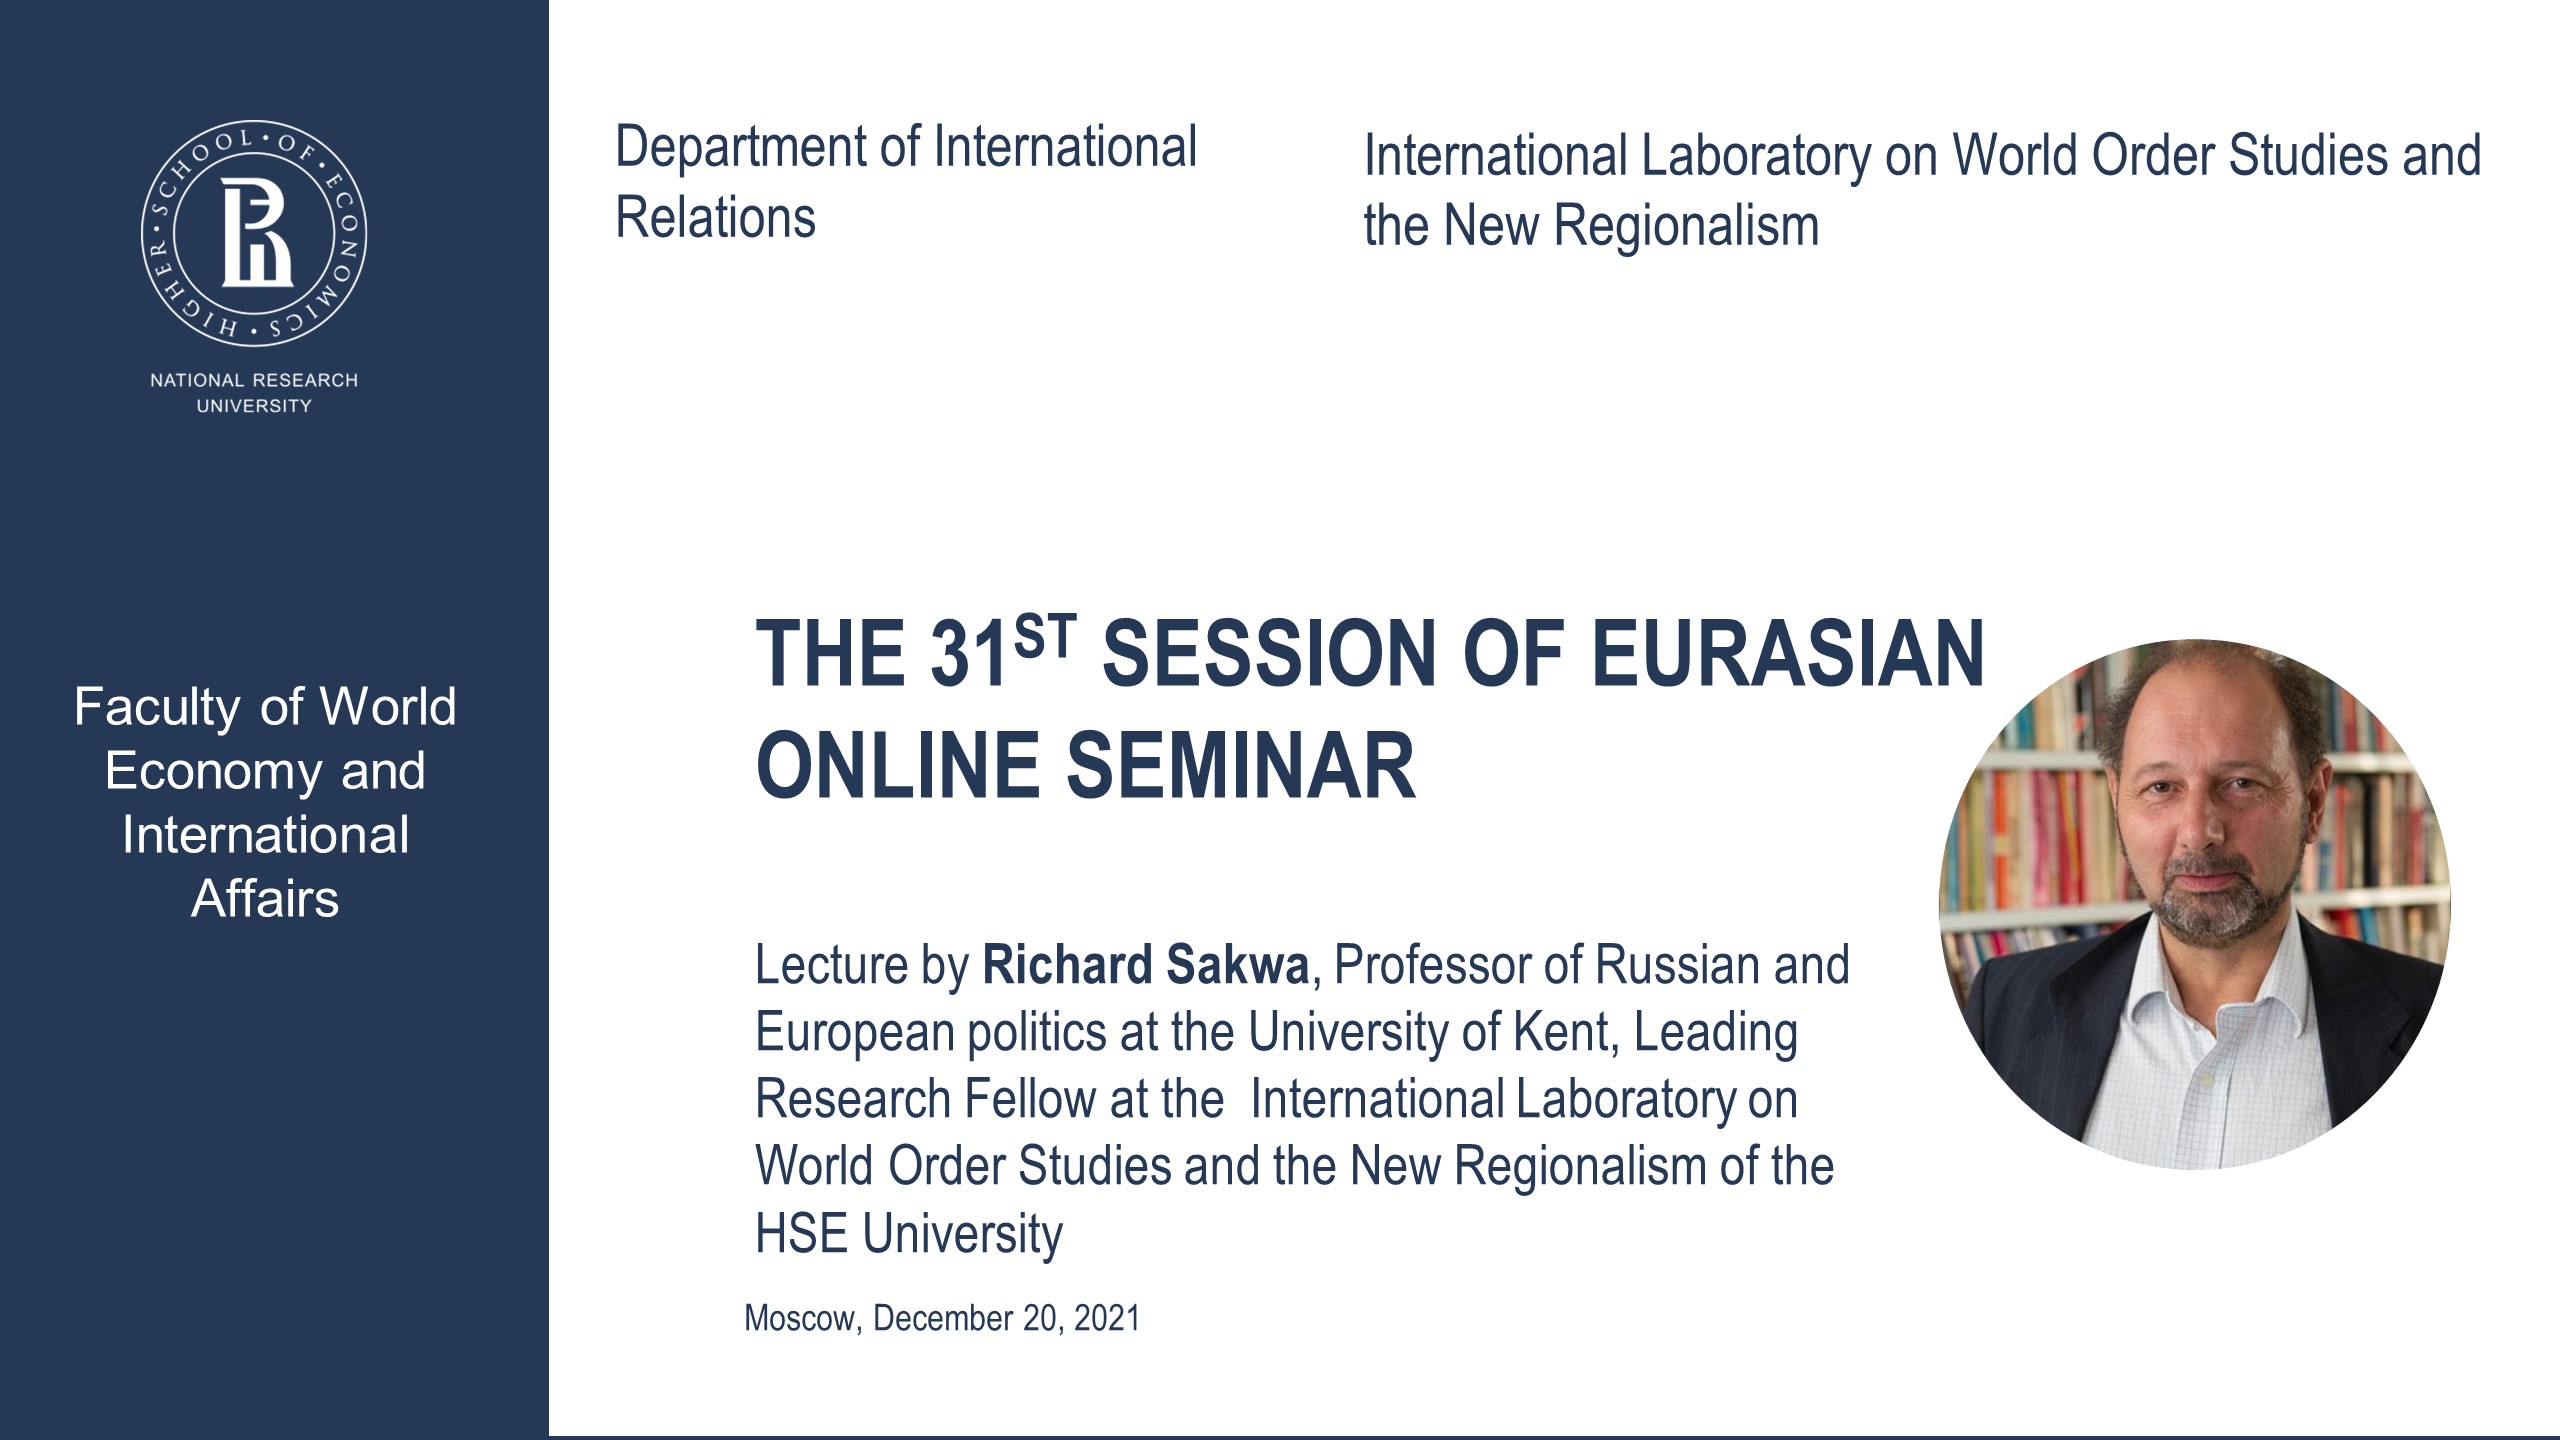 The 31st Session of Eurasian Online Seminar with Richard Sakwa